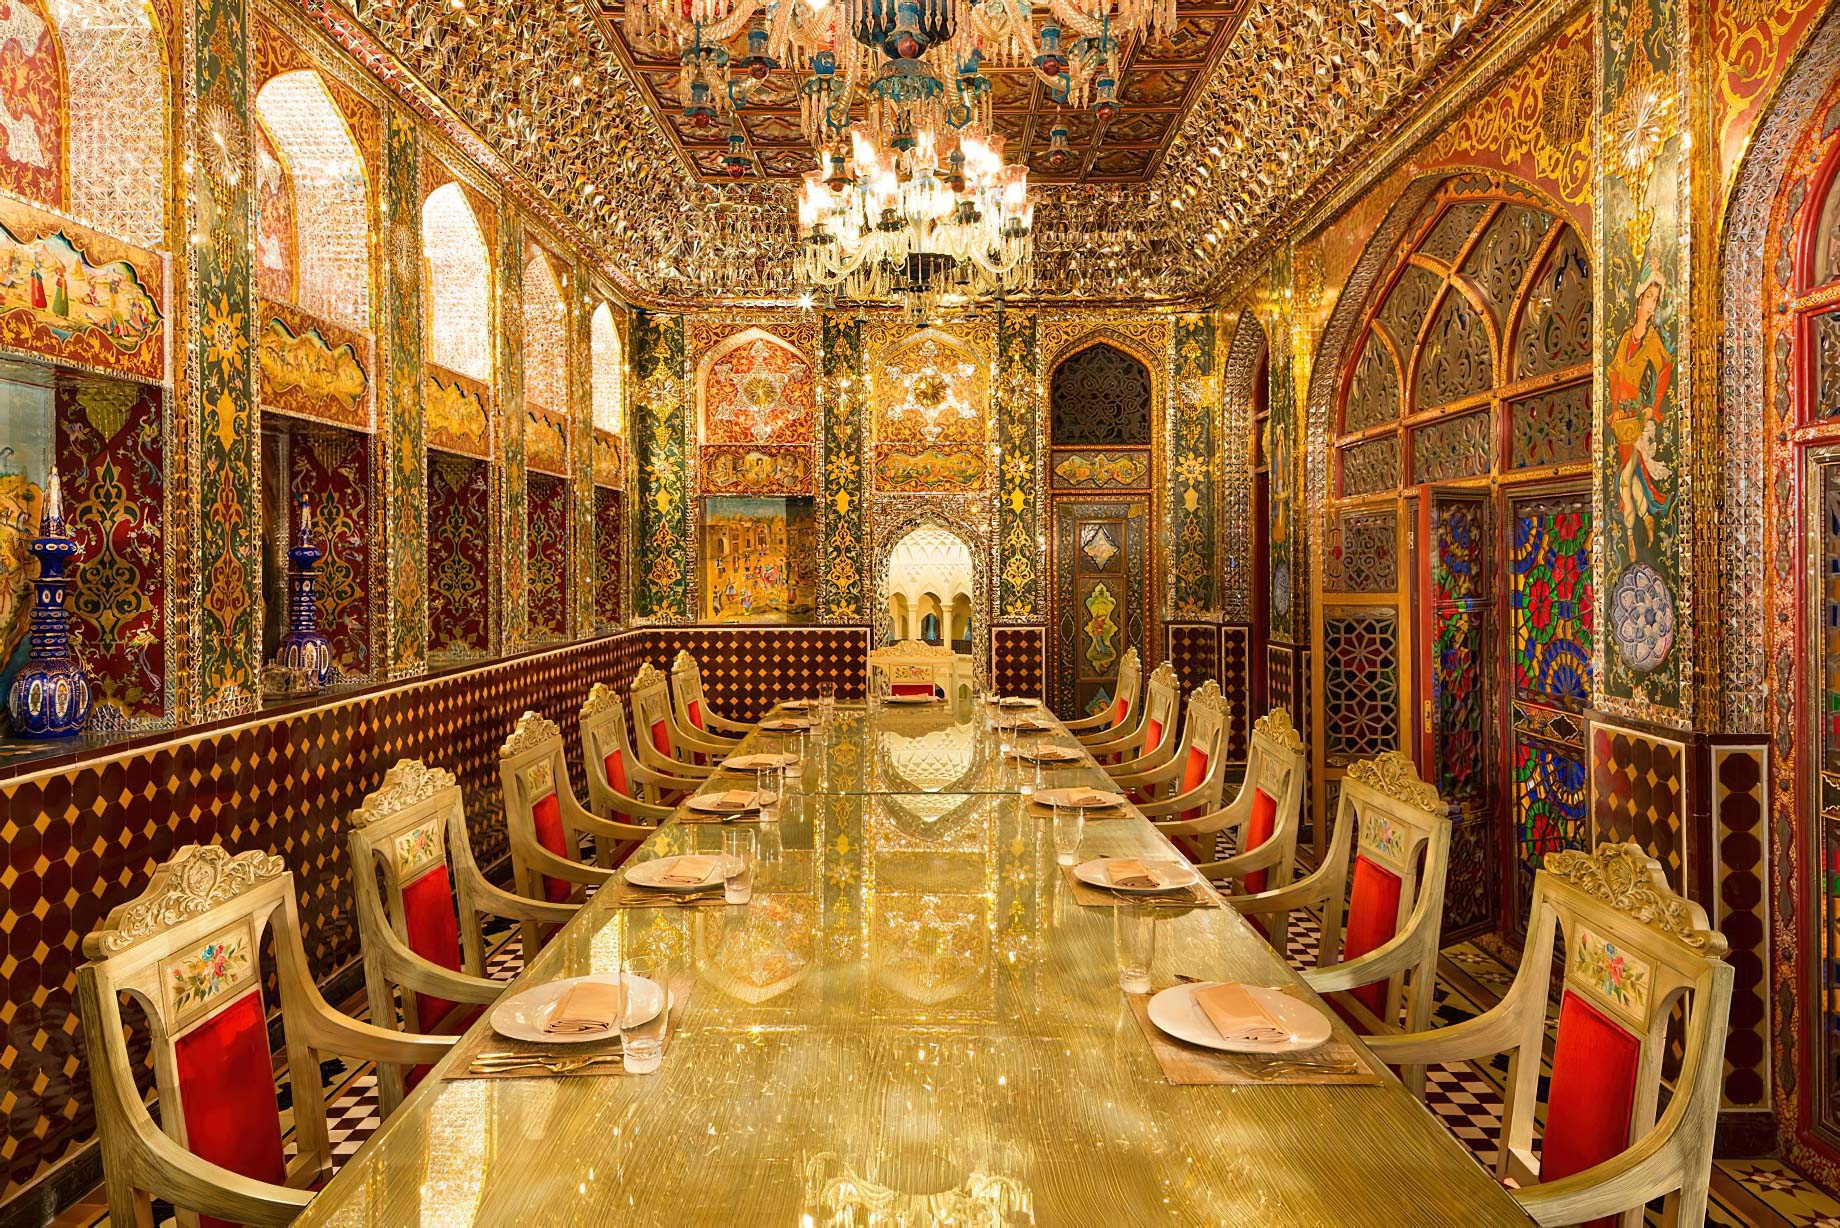 Sharq Village & Spa, A Ritz-Carlton Hotel - Doha, Qatar - At Parisa Souq Waqif Restaurant Dining Room